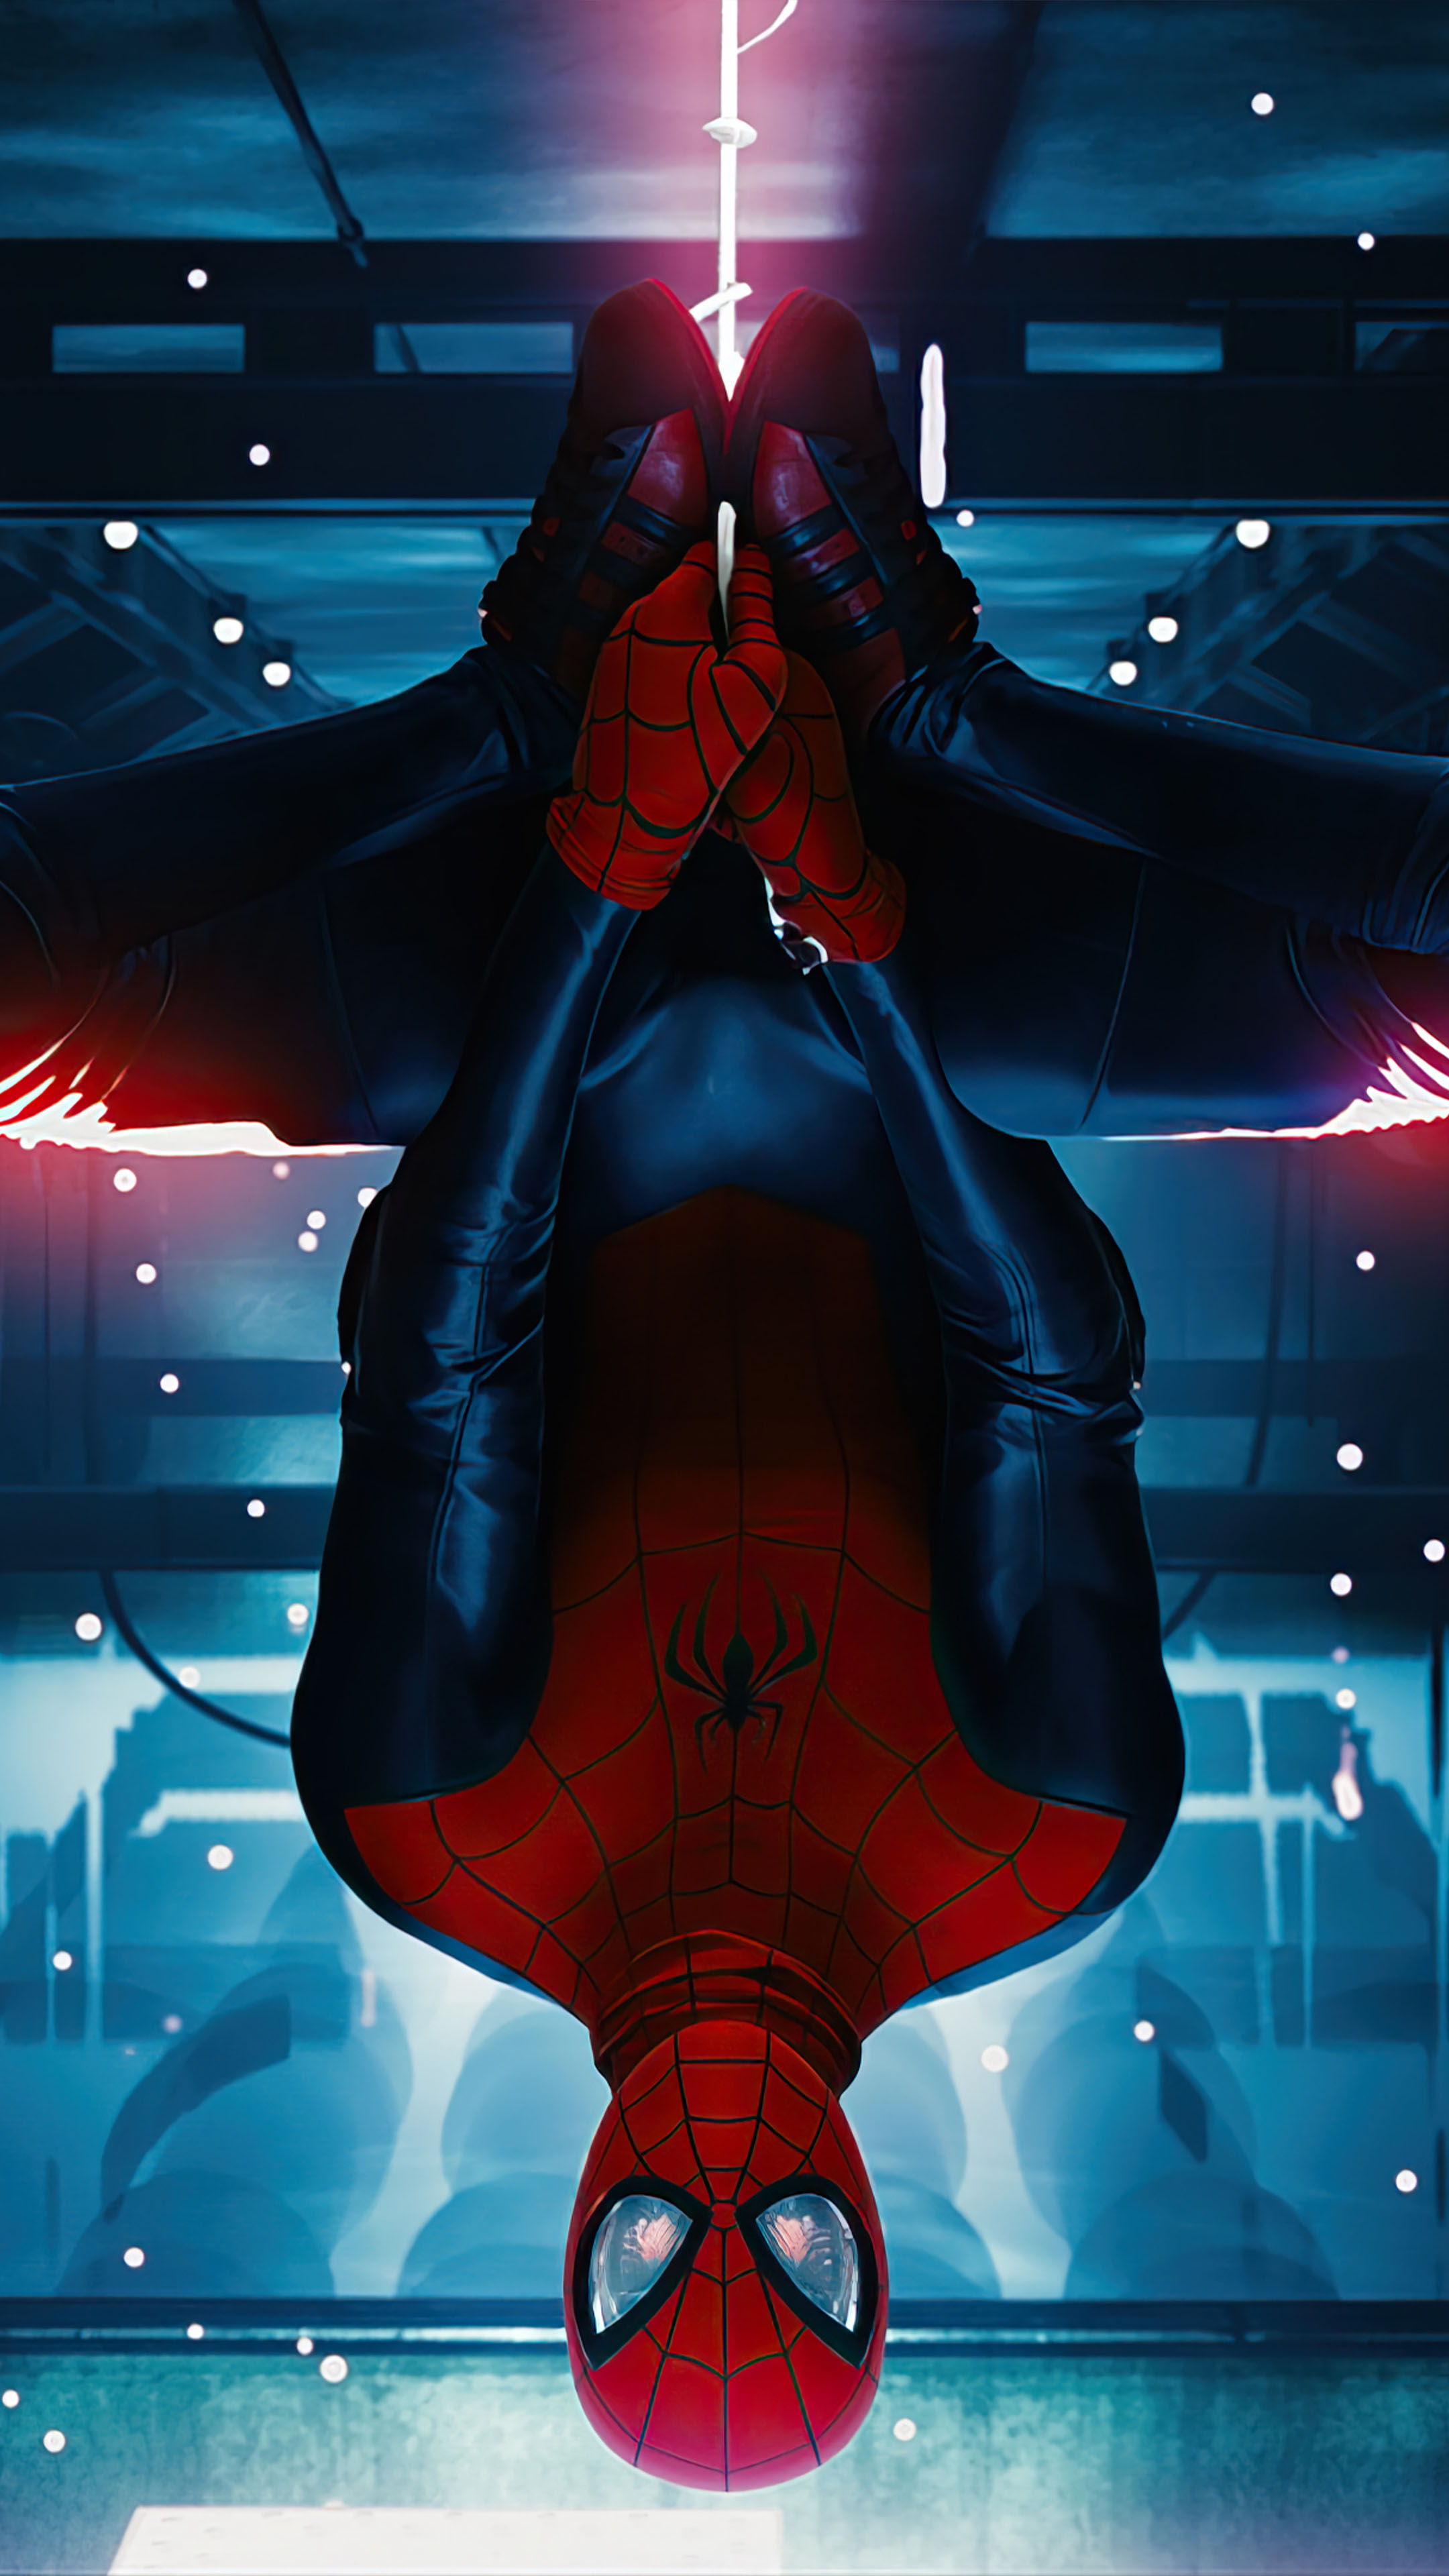 Spider-man Miles Morales Hanging Upside Down 4K Ultra HD Mobile Wallpaper